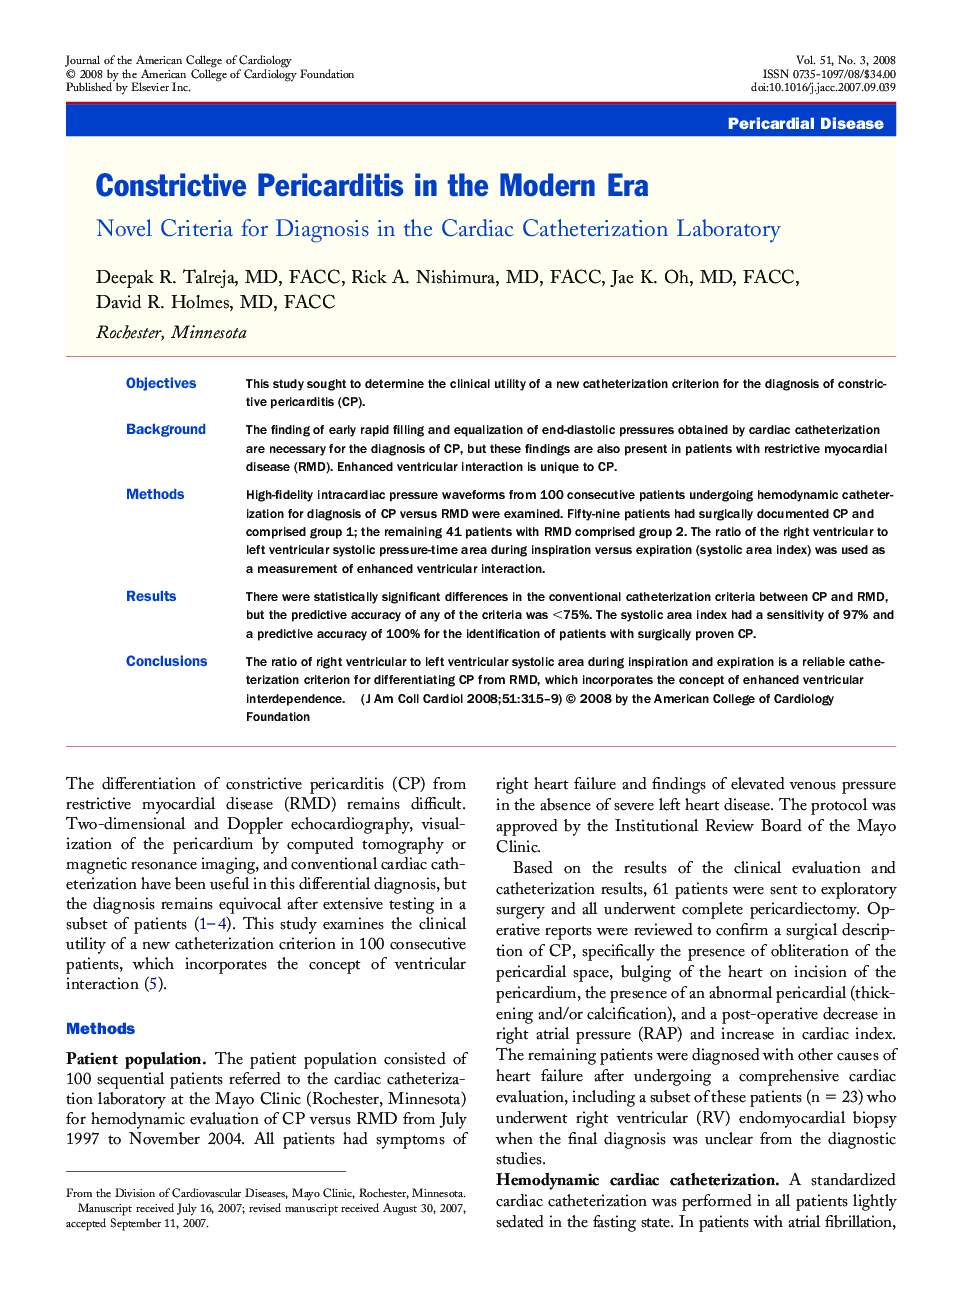 Constrictive Pericarditis in the Modern Era: Novel Criteria for Diagnosis in the Cardiac Catheterization Laboratory